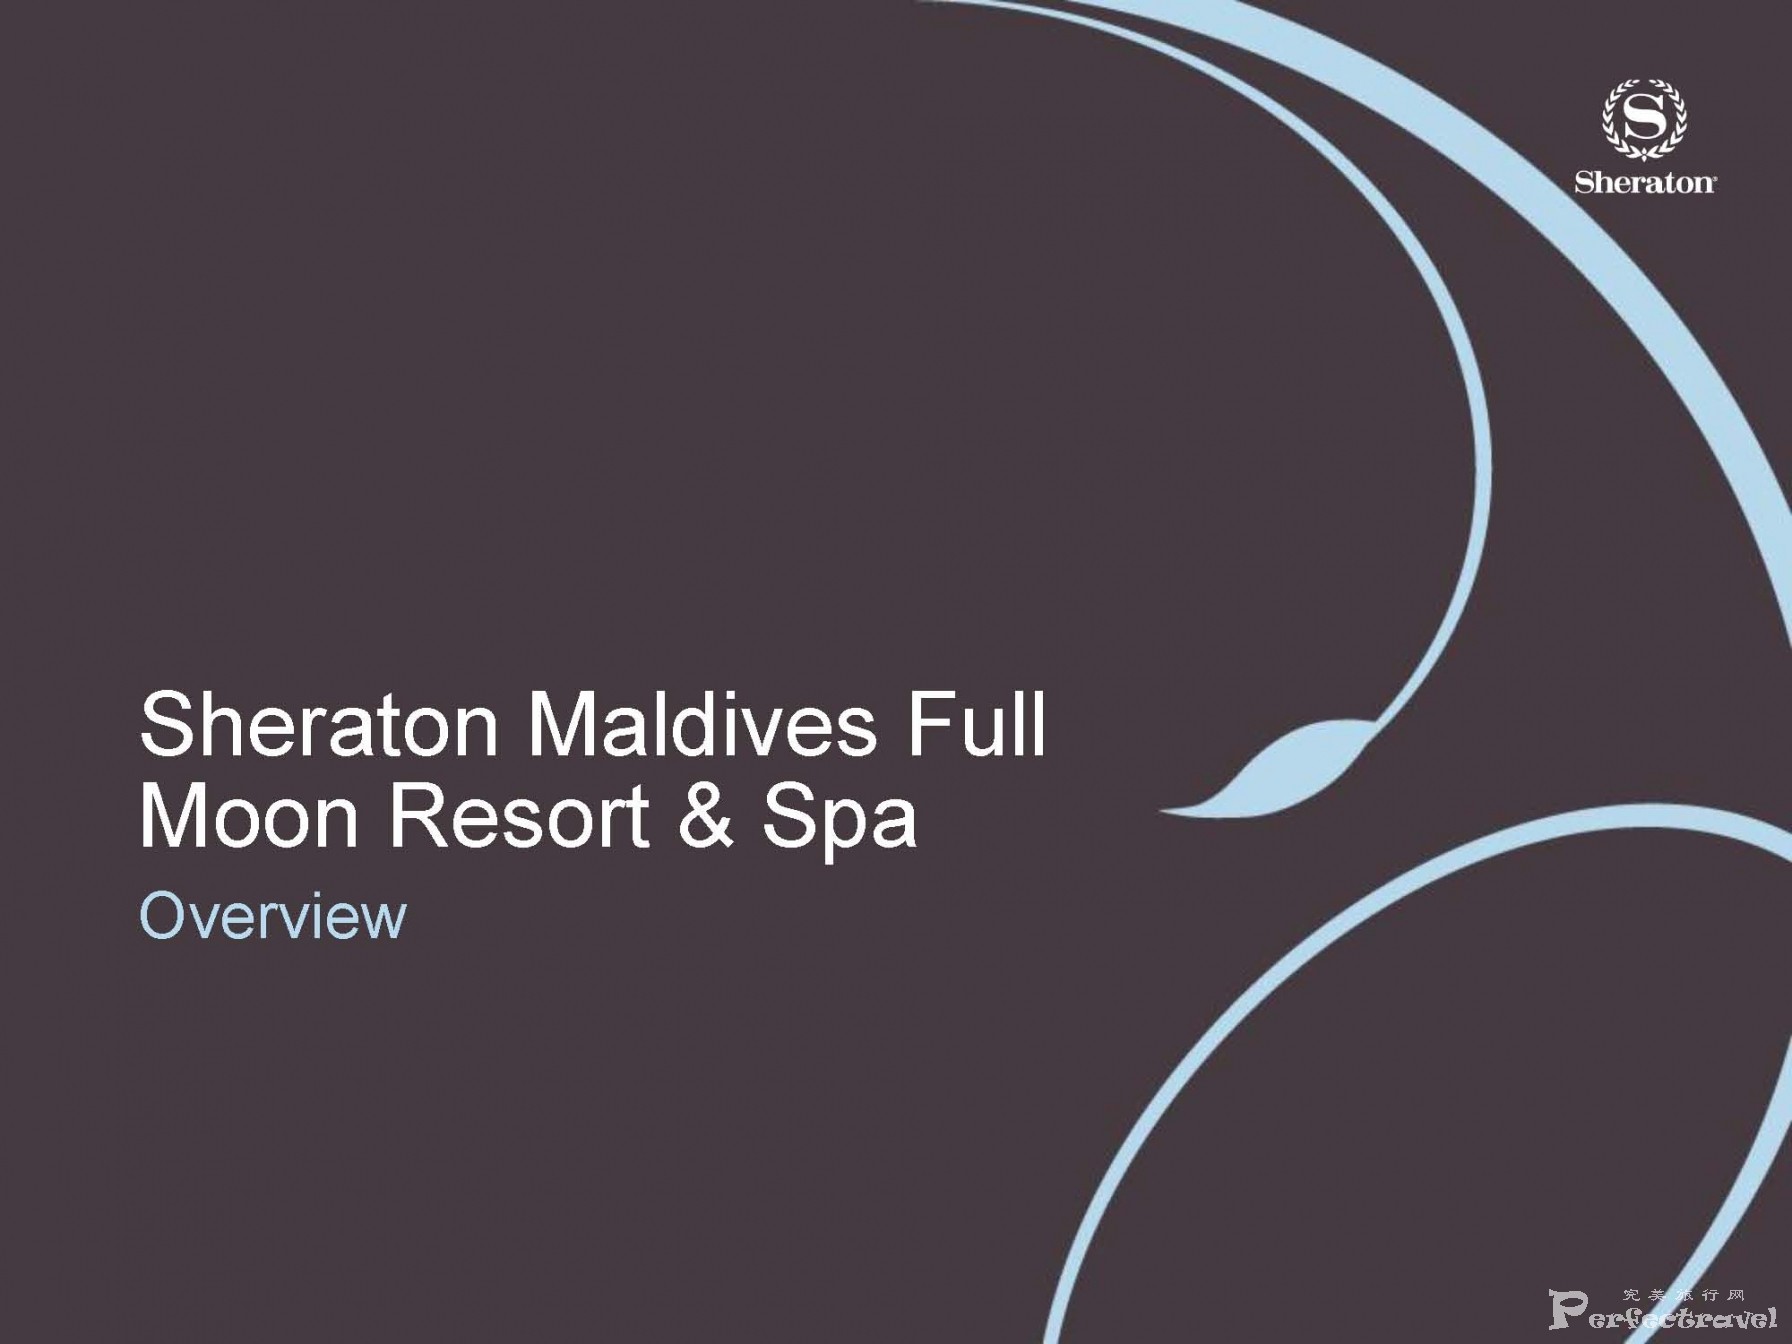 Sheraton Maldives - Overview Presentation 2015_Page_01.jpg